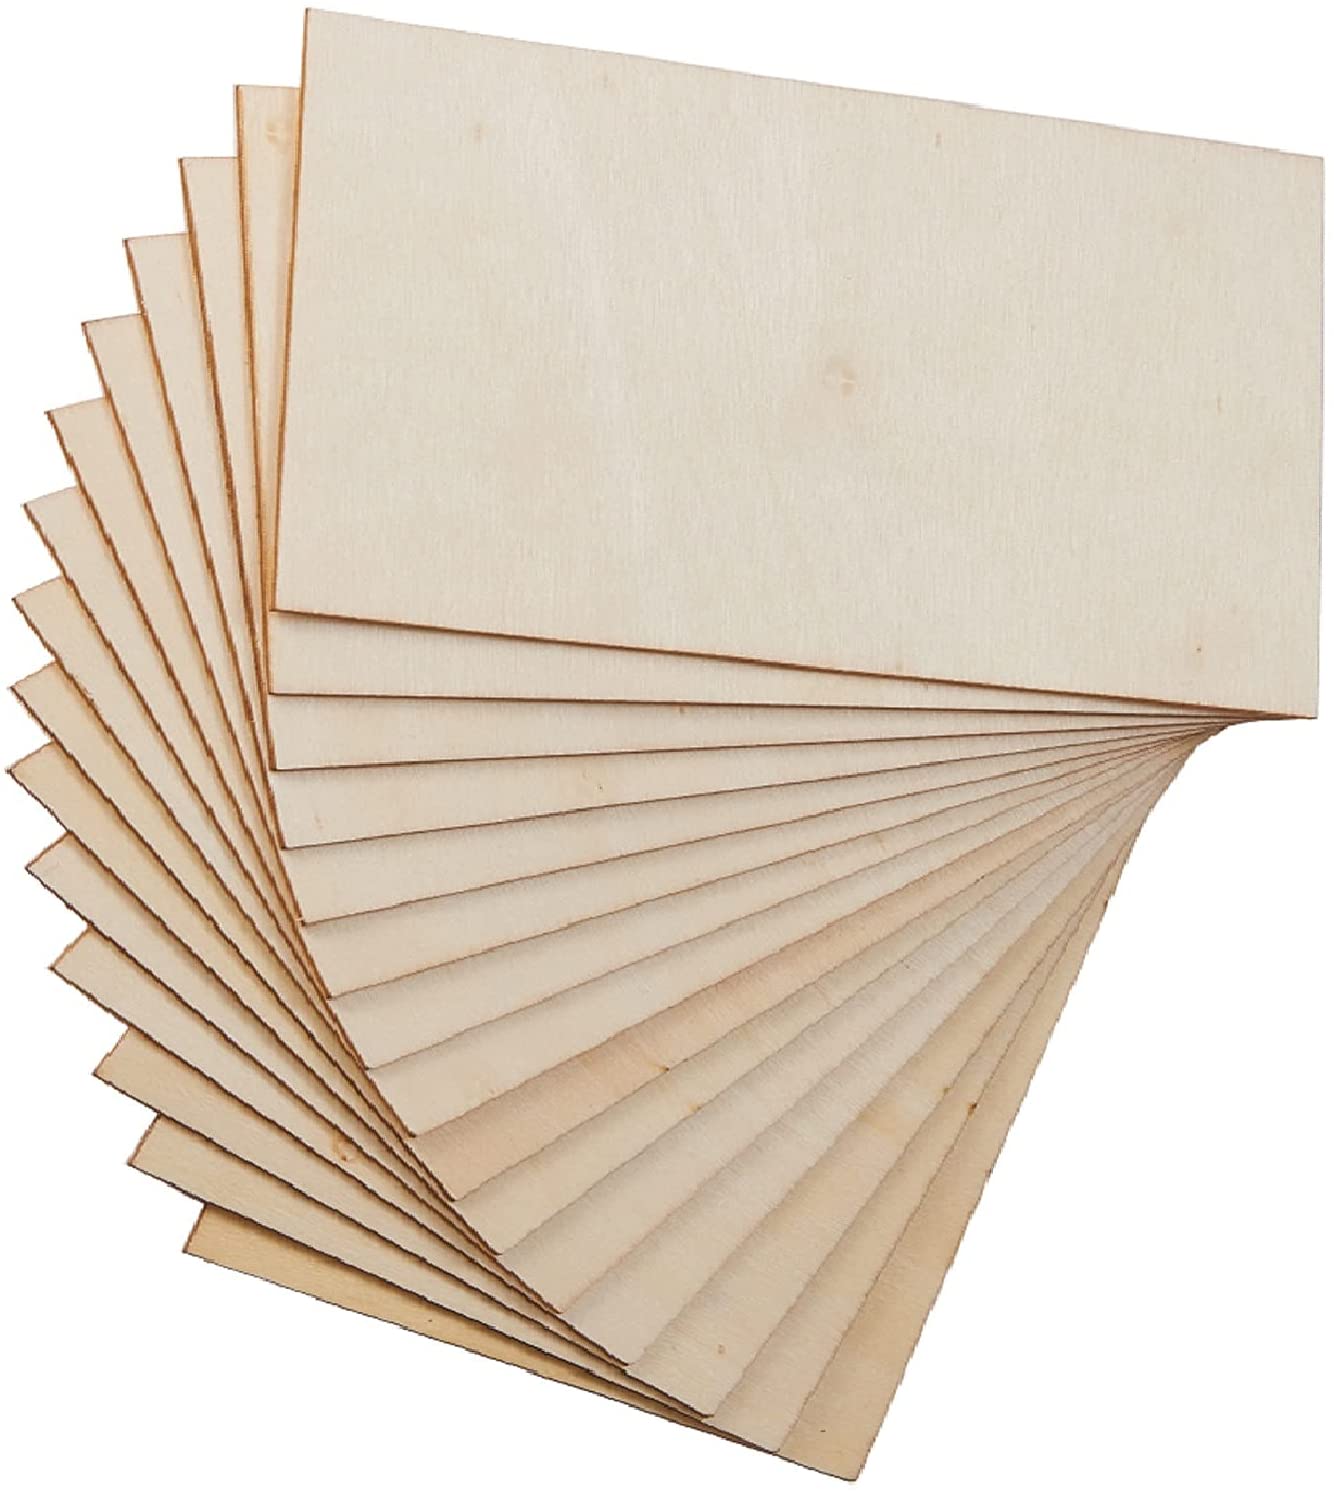 15Pack Balsa Wood Sheets Basswood Thin Wood Sheets Hobby Wood for